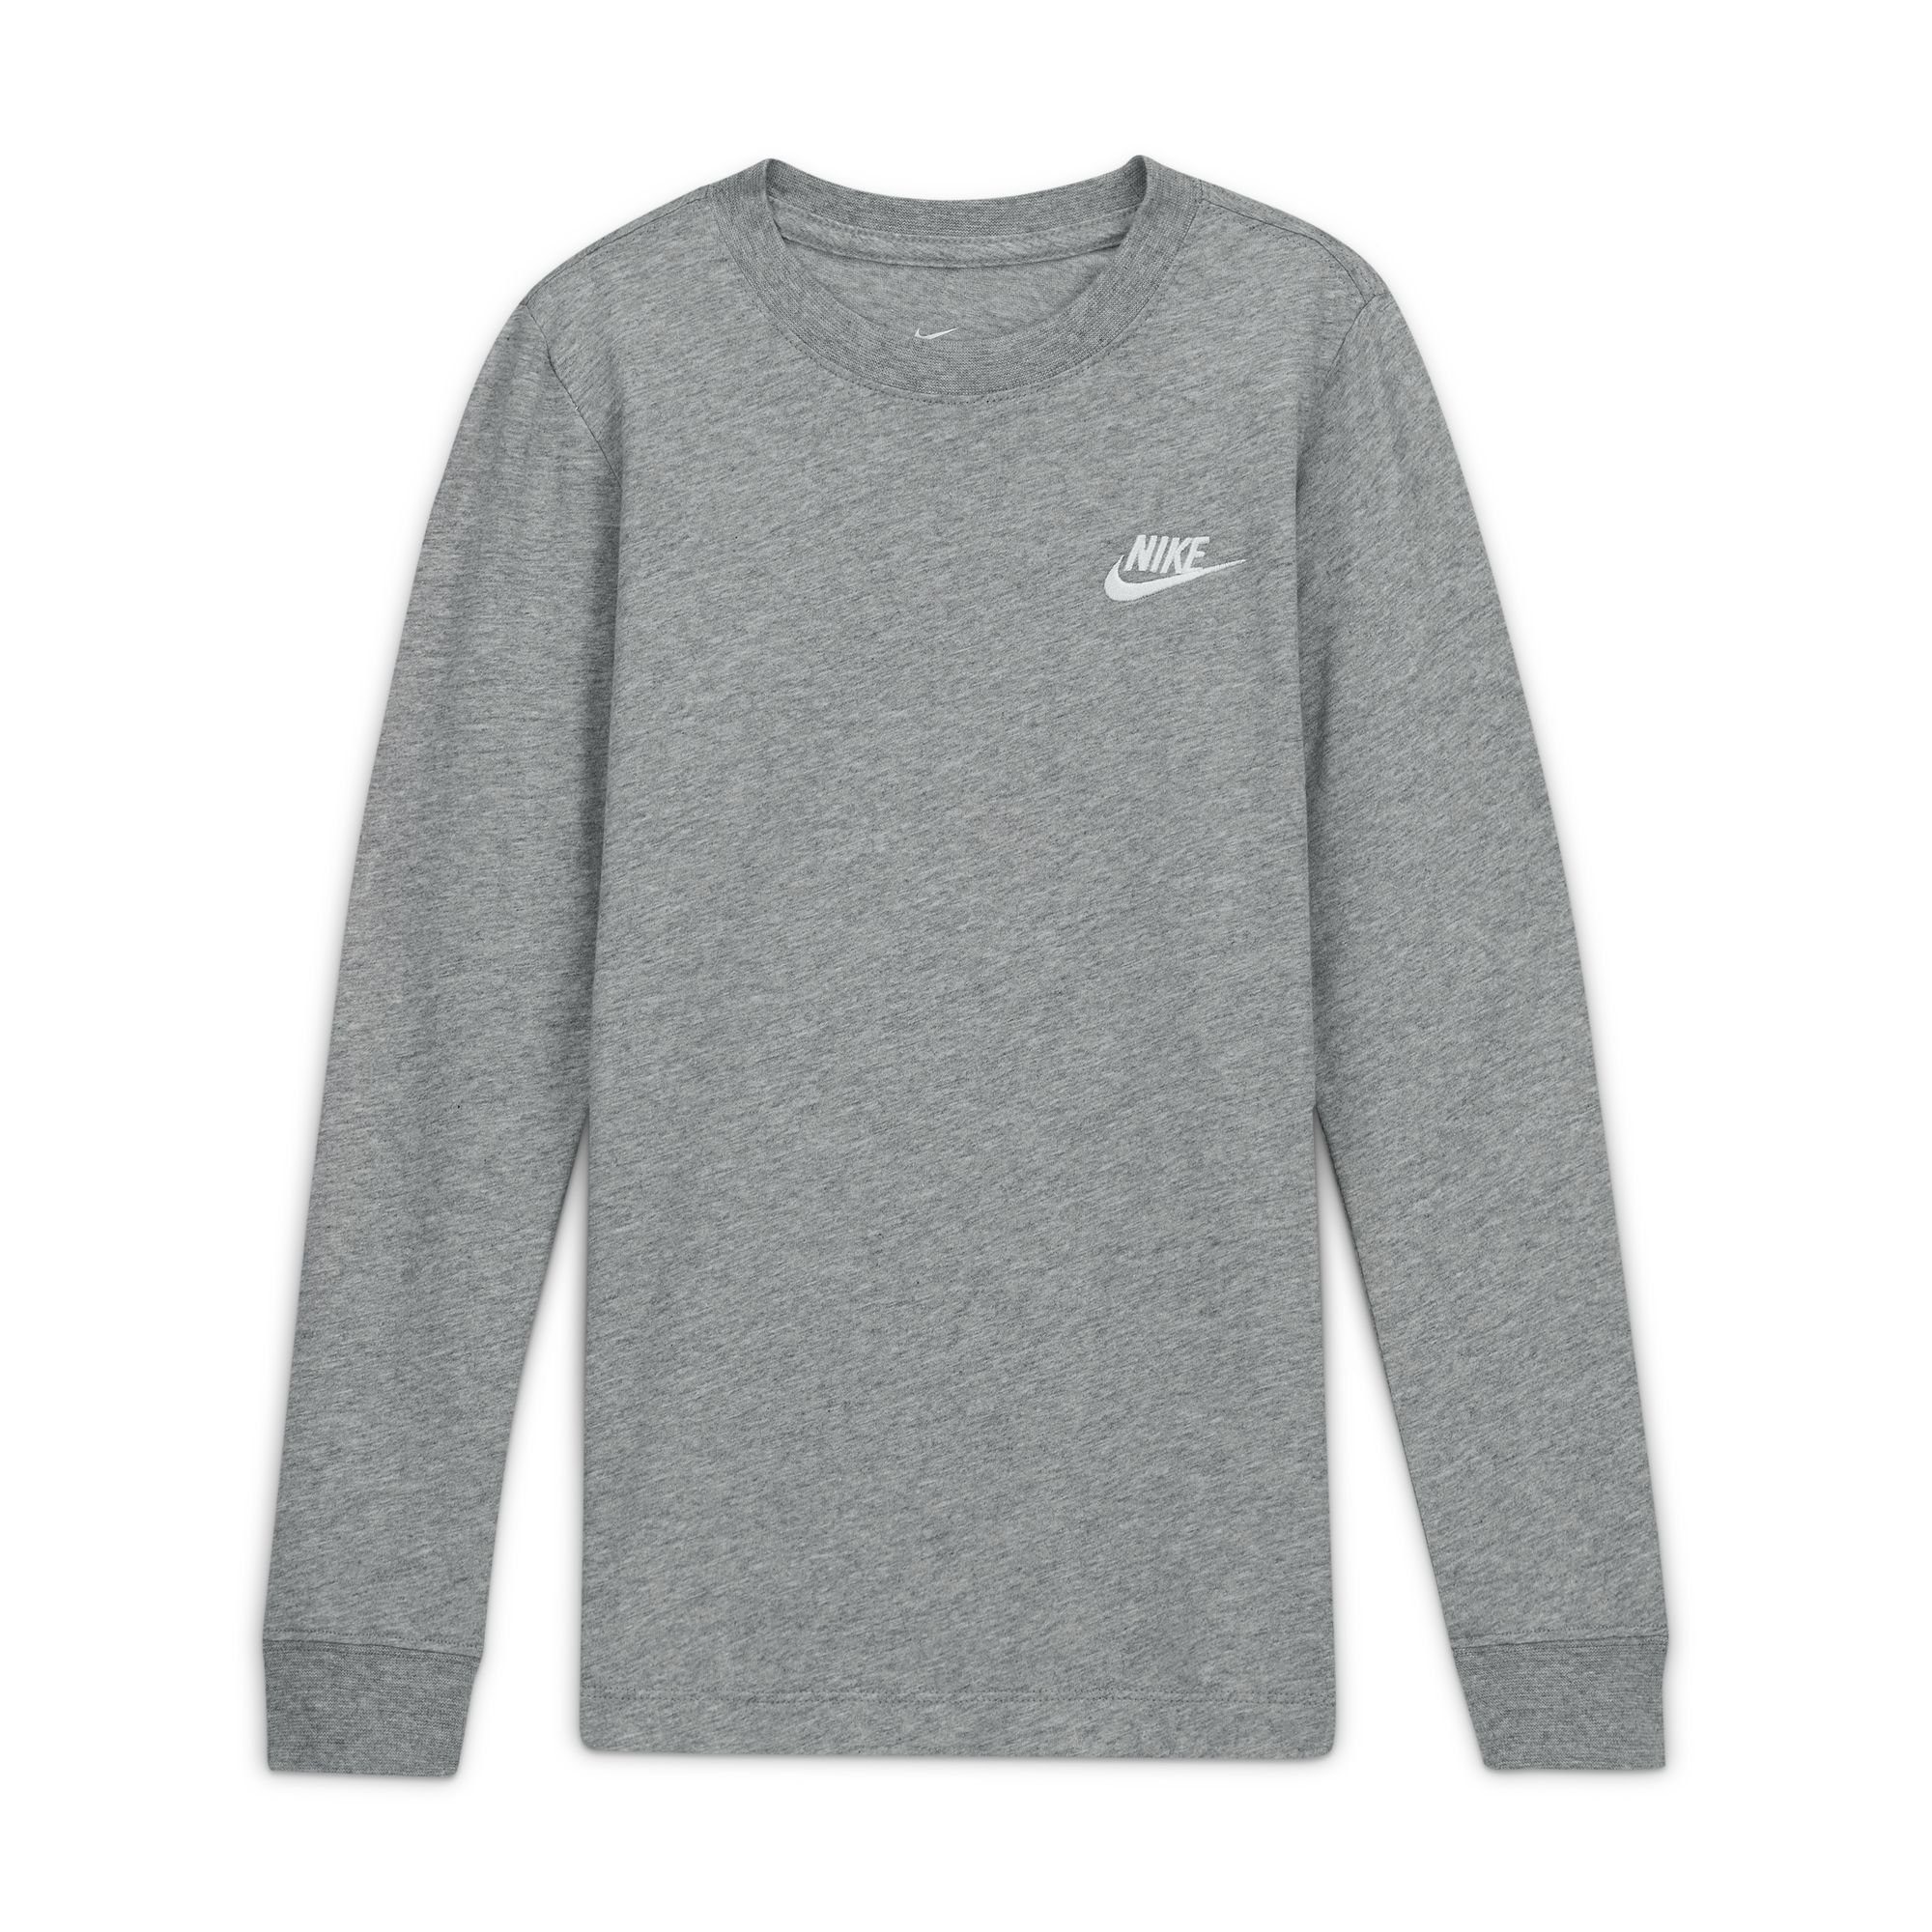 Langarmshirt (BOYS) Sportswear T-SHIRT KIDS' Nike BIG LONG-SLEEVE GREY HEATHER/WHITE DK